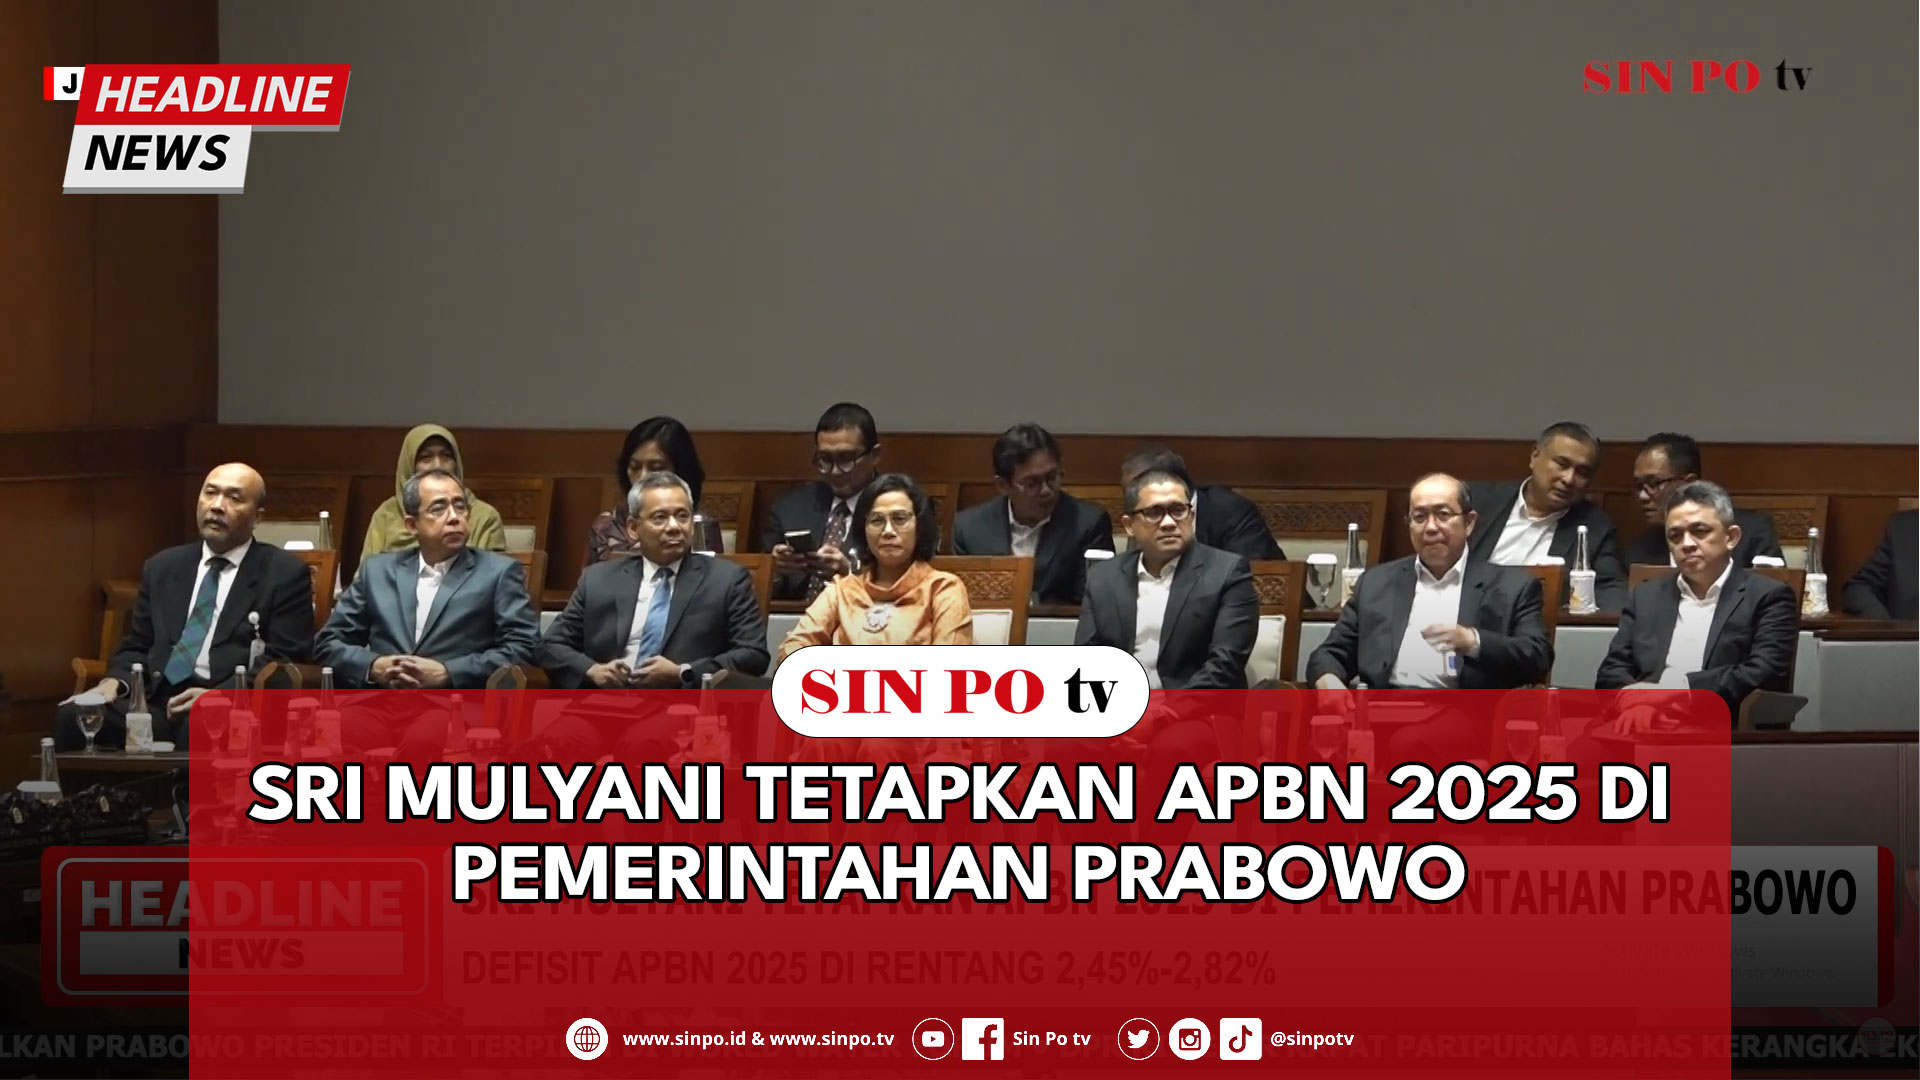 Sri Mulyani Tetapkan APBN 2025 Di Pemerintahan Prabowo